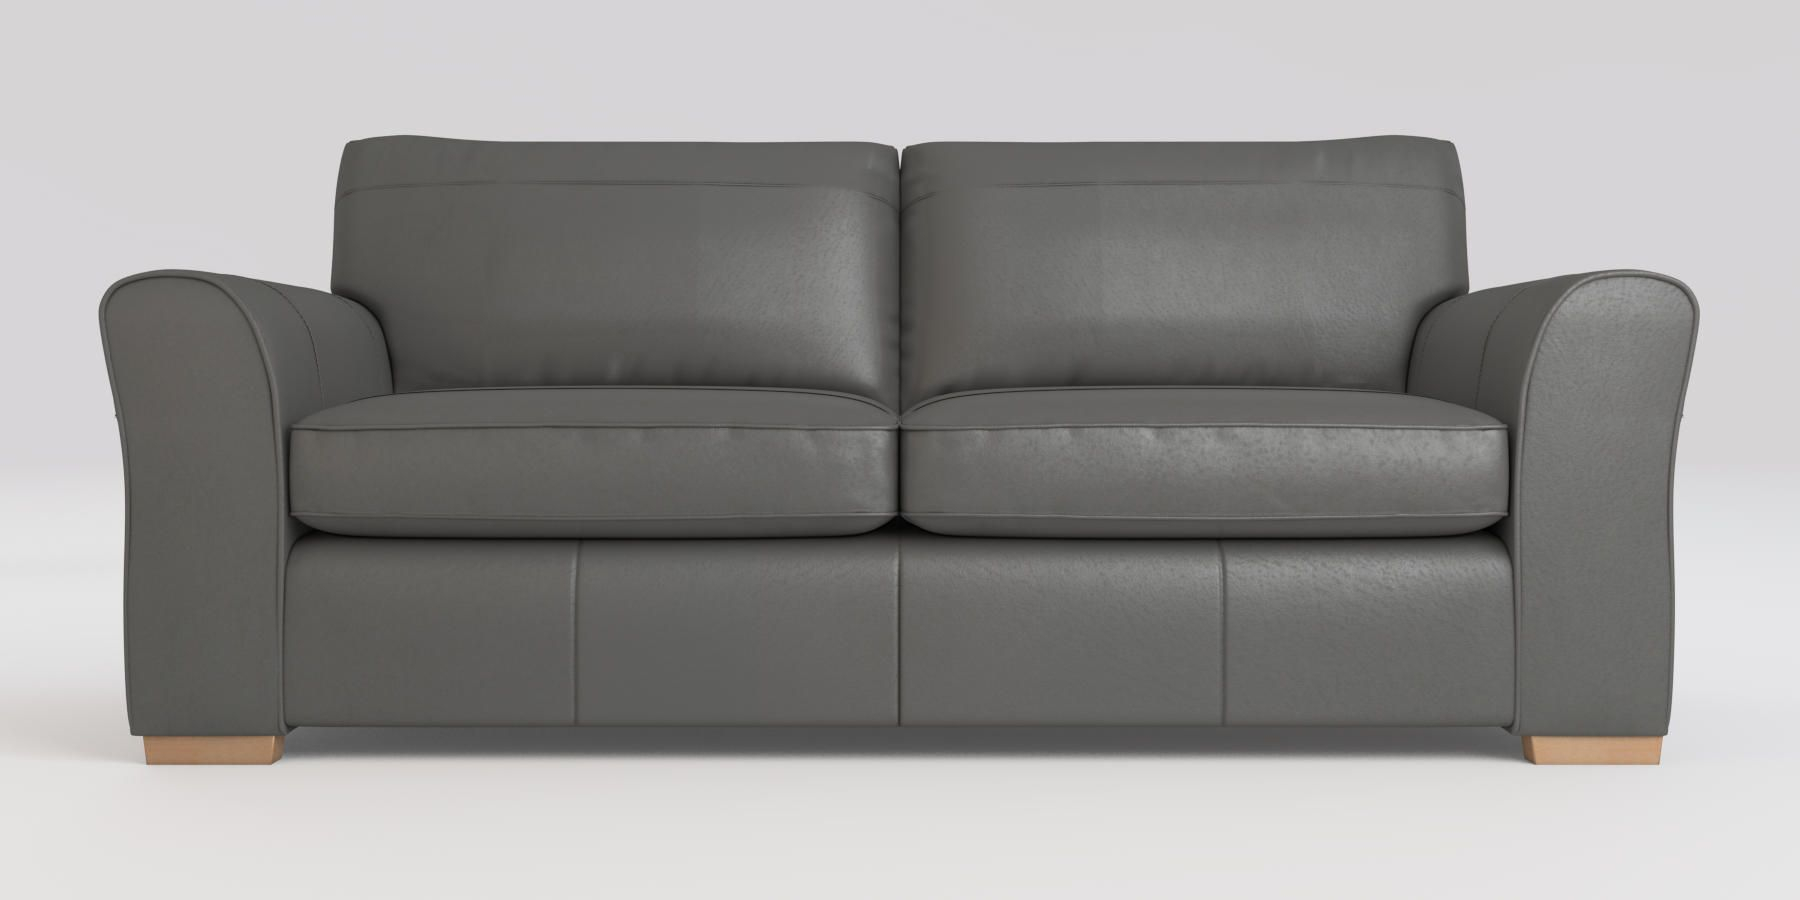 michigan leather sofa bed